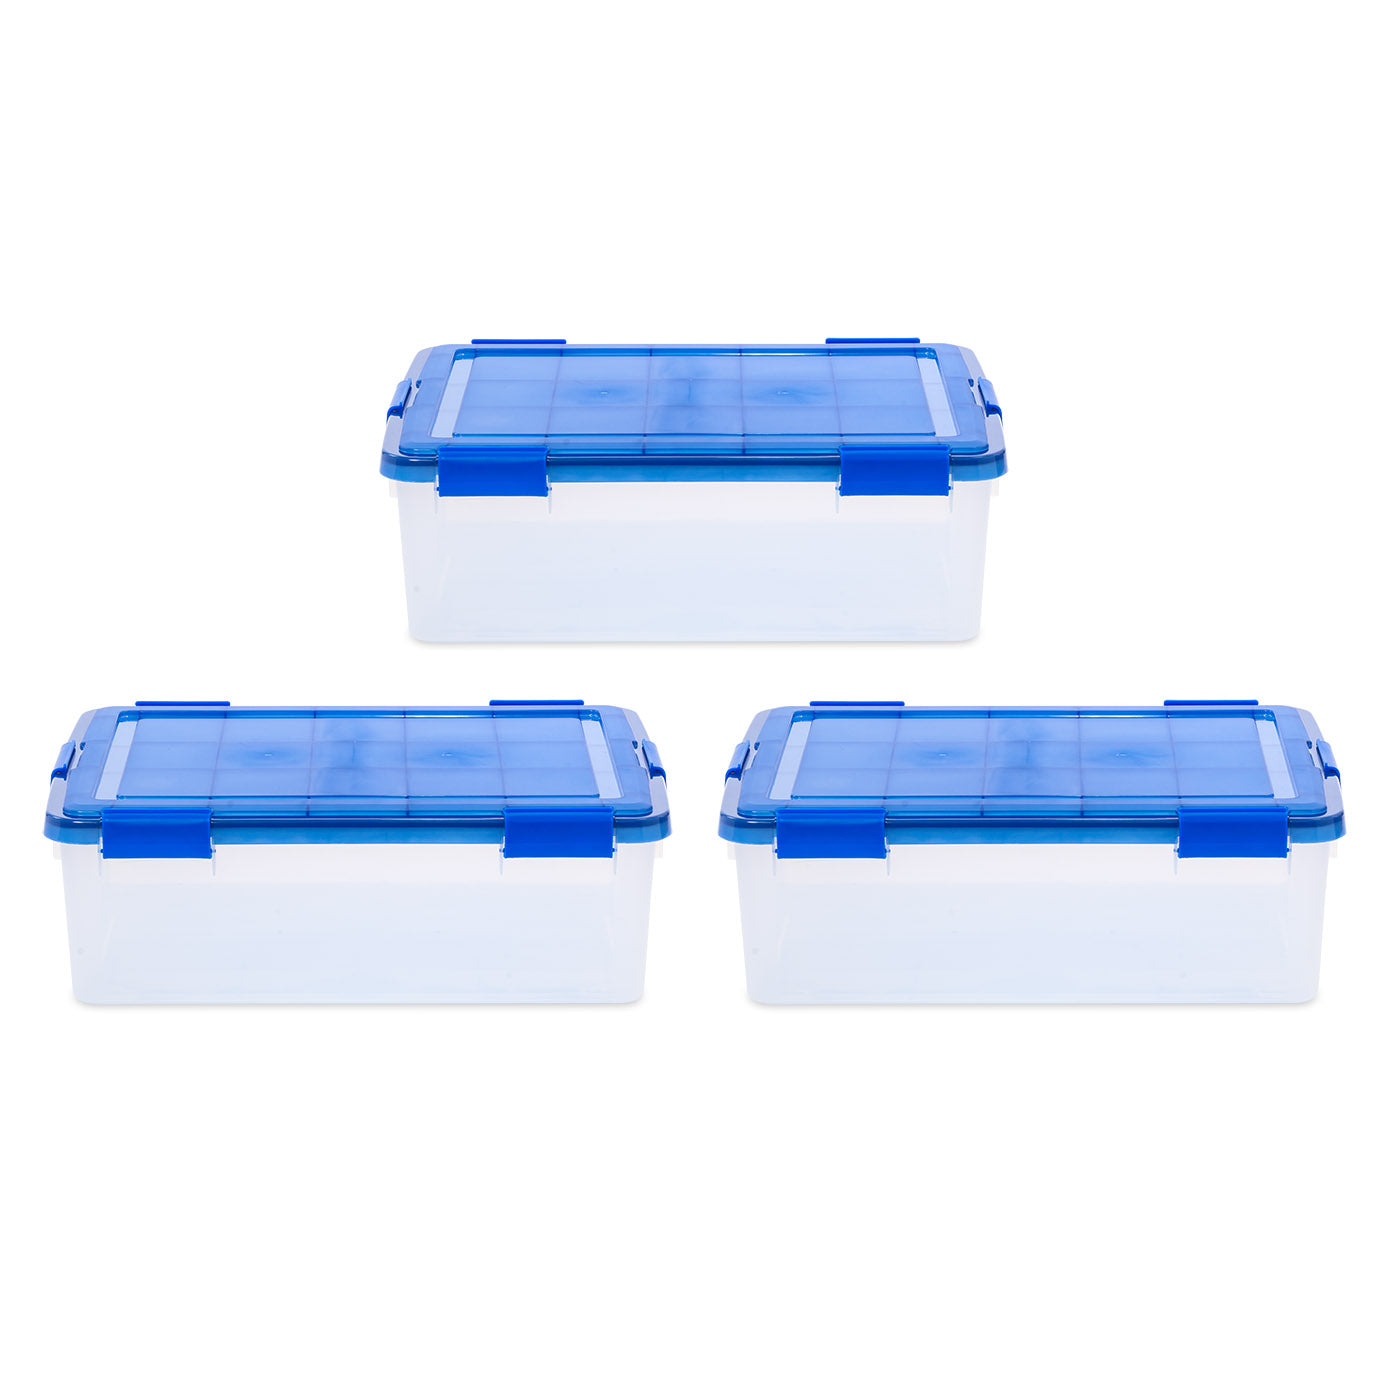 IRIS USA 60-Quart WeatherPro Gasket Clear Plastic Storage Box with Lid,  Blue (Set of 4)